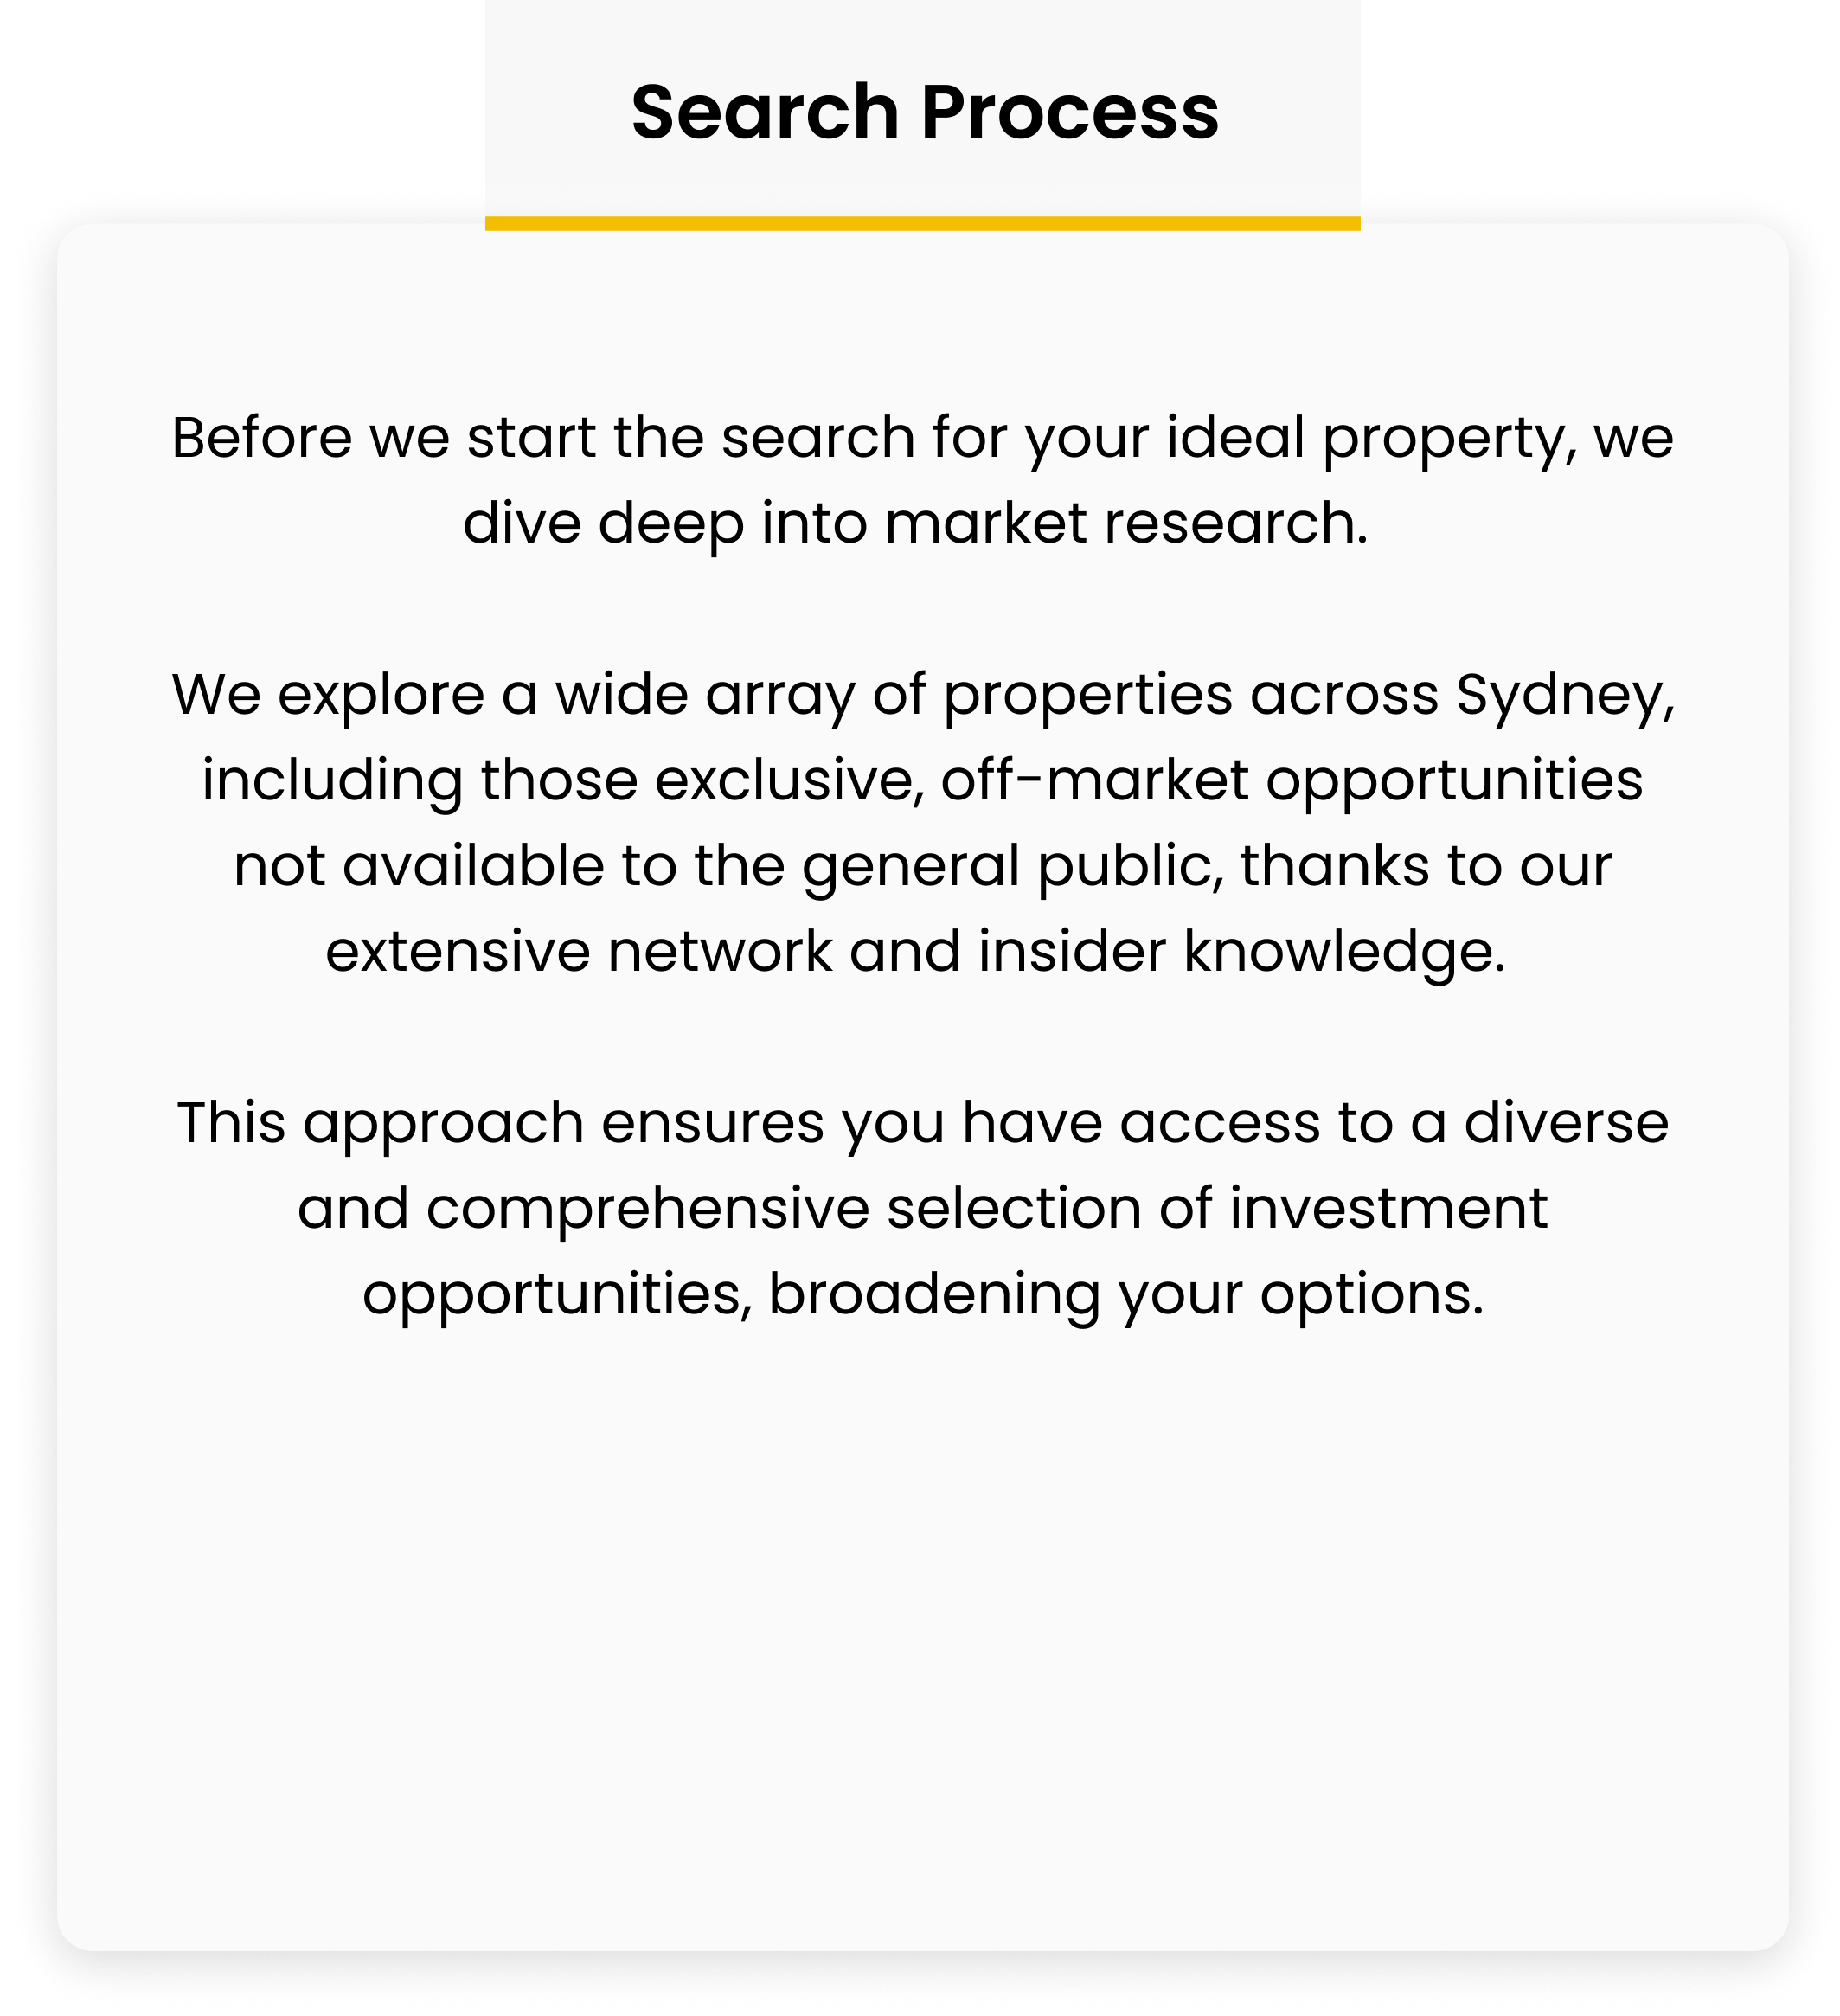 Search Process